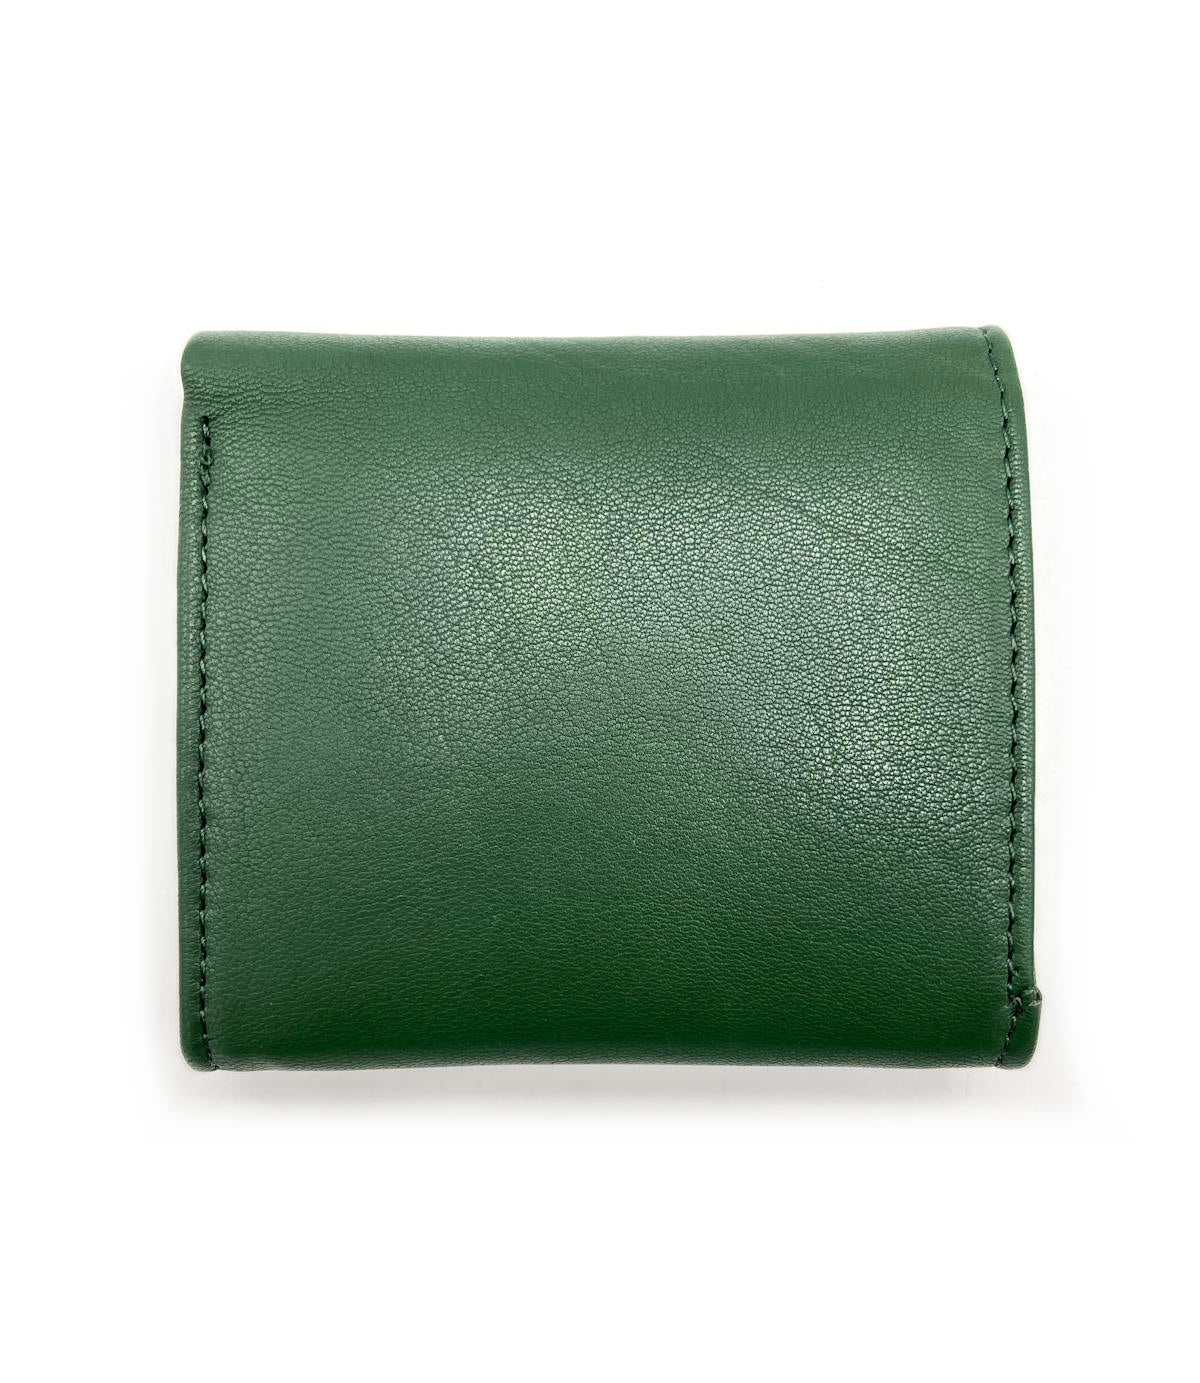 Genuine leather wallet, Brand EC COVERI, art. EC23760-45